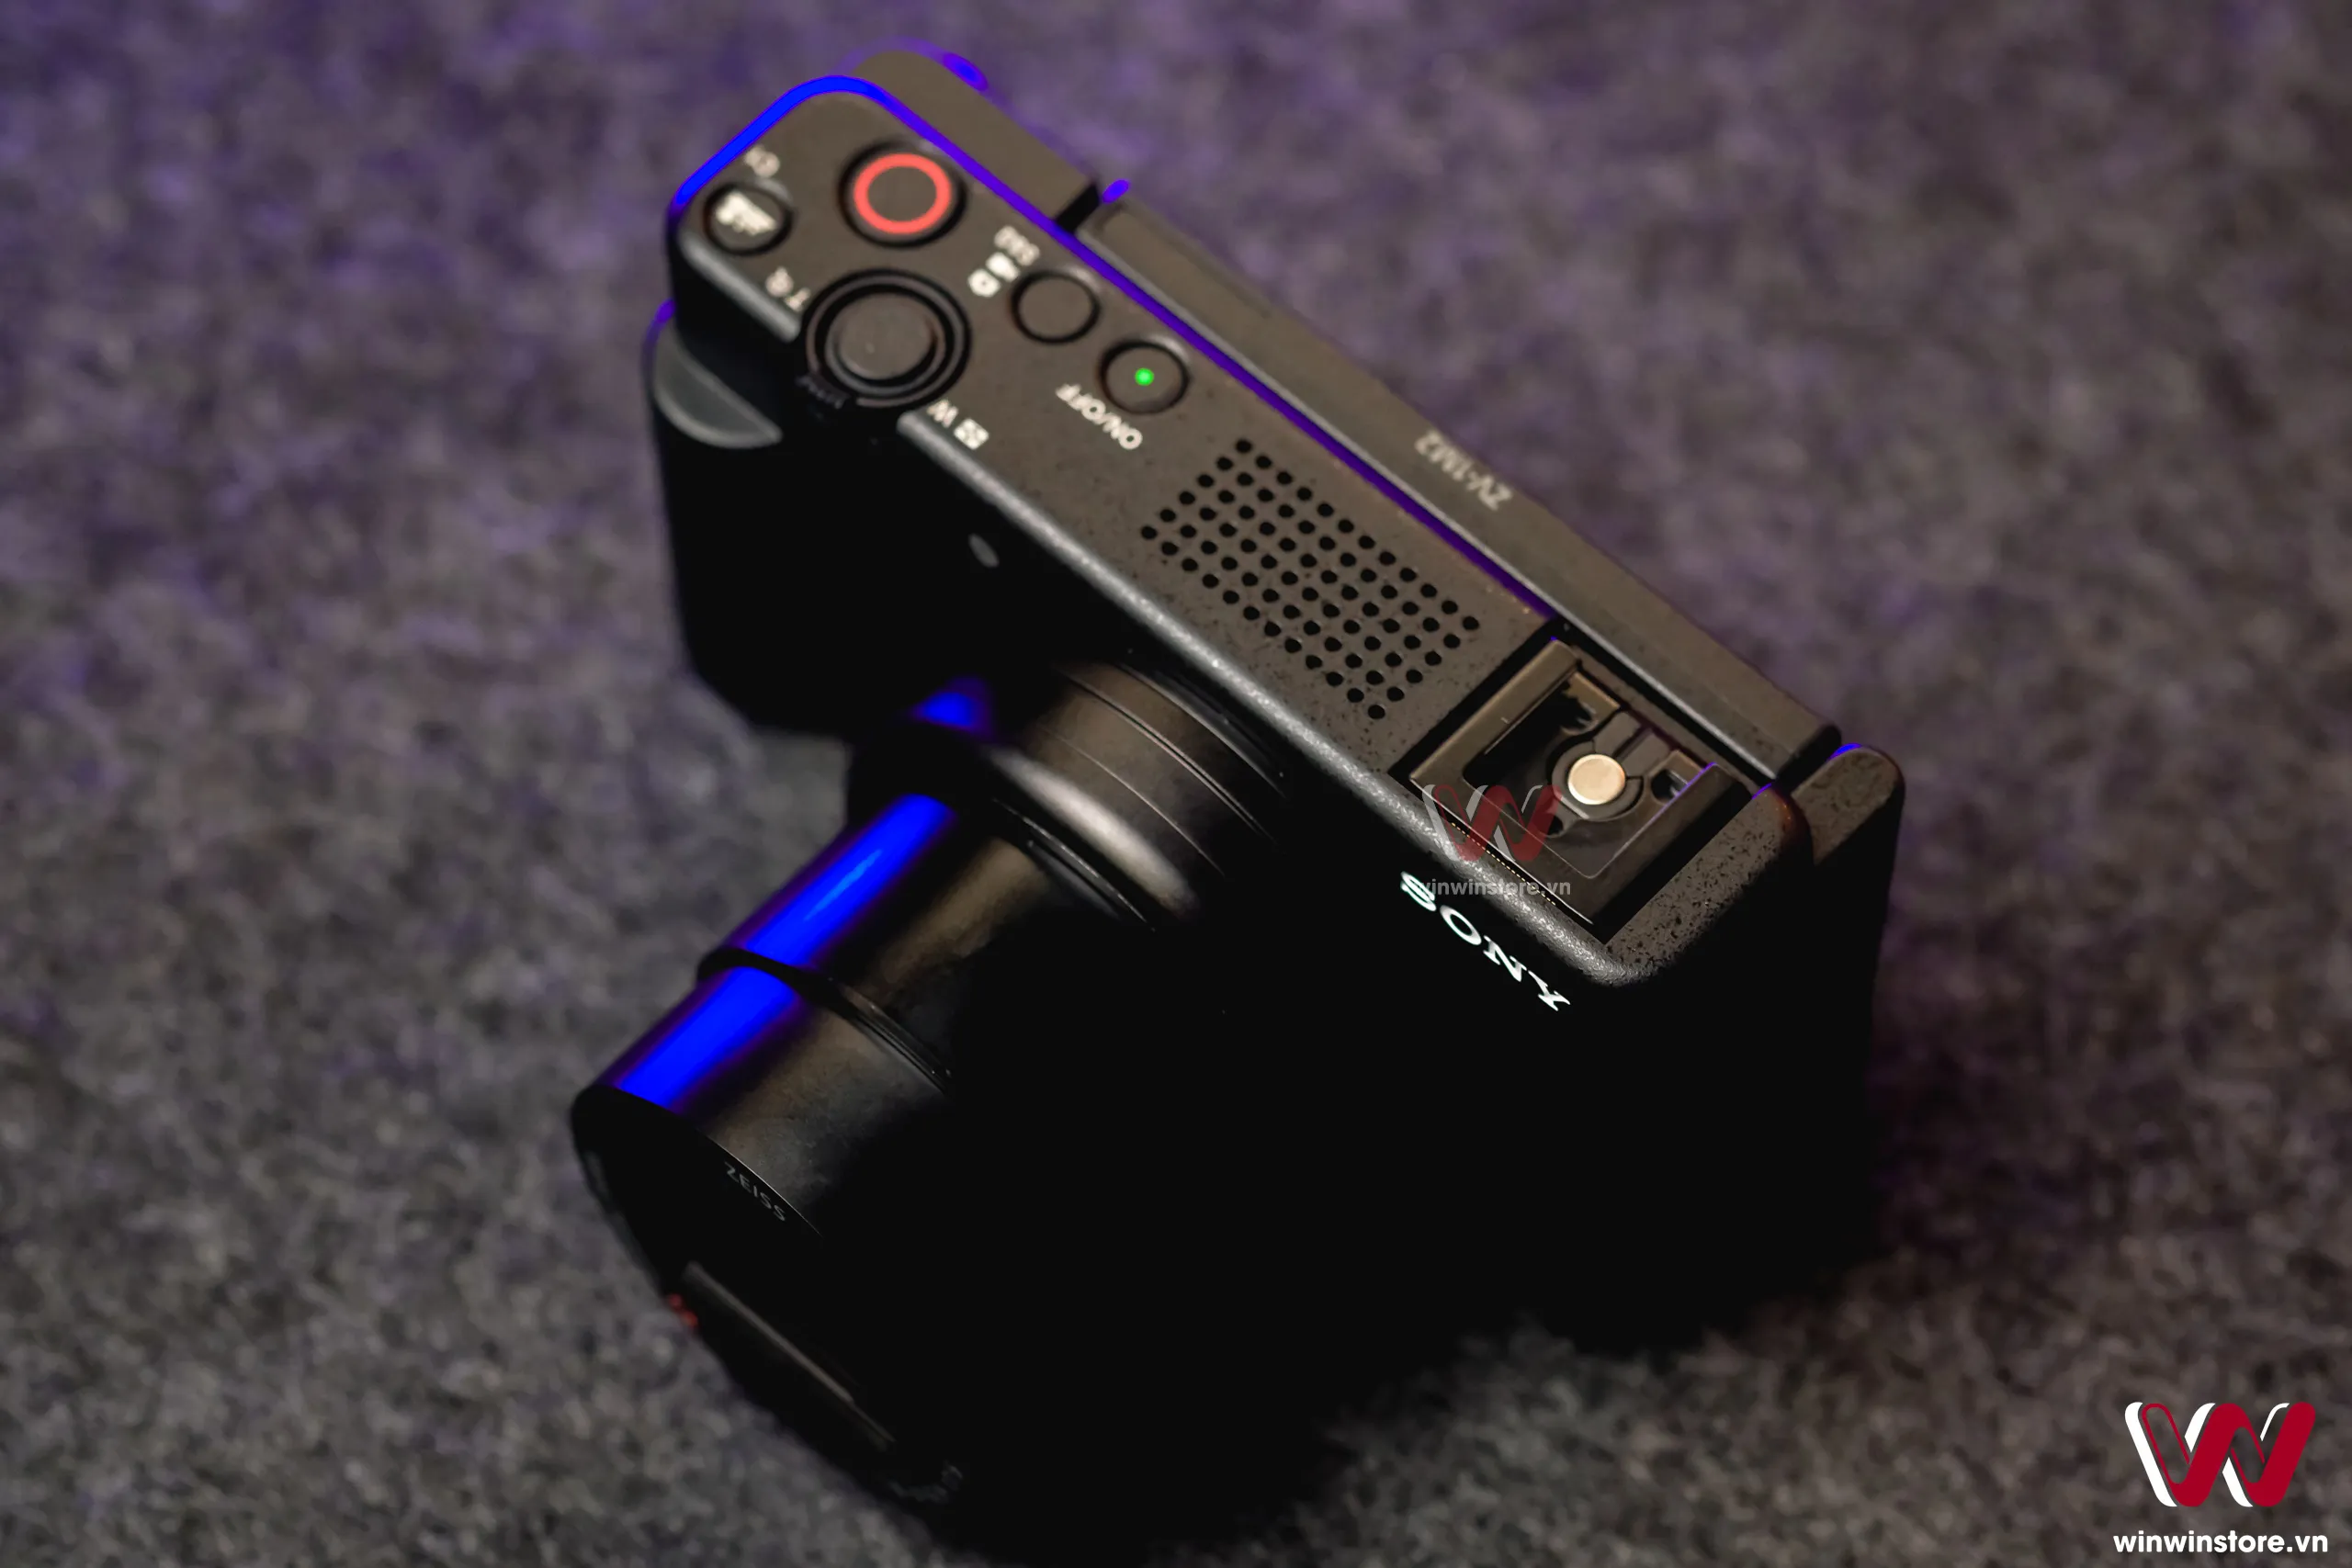 Máy ảnh Sony ZV-1 II (Black)